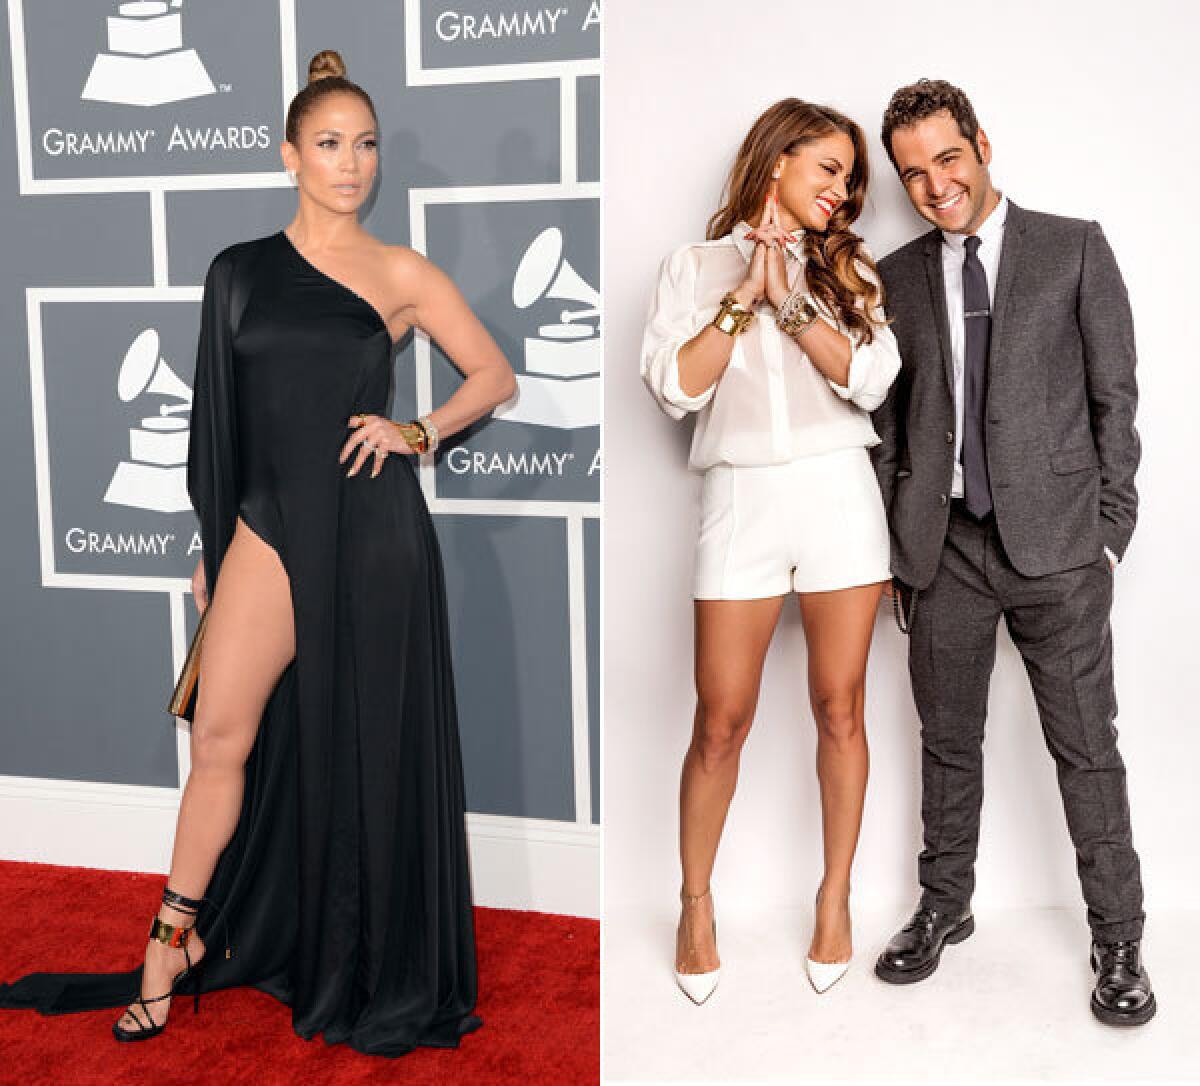 Jennifer Lopez at the 55th Grammy Awards and her stylists, Rob Zangardi and Mariel Haenn.